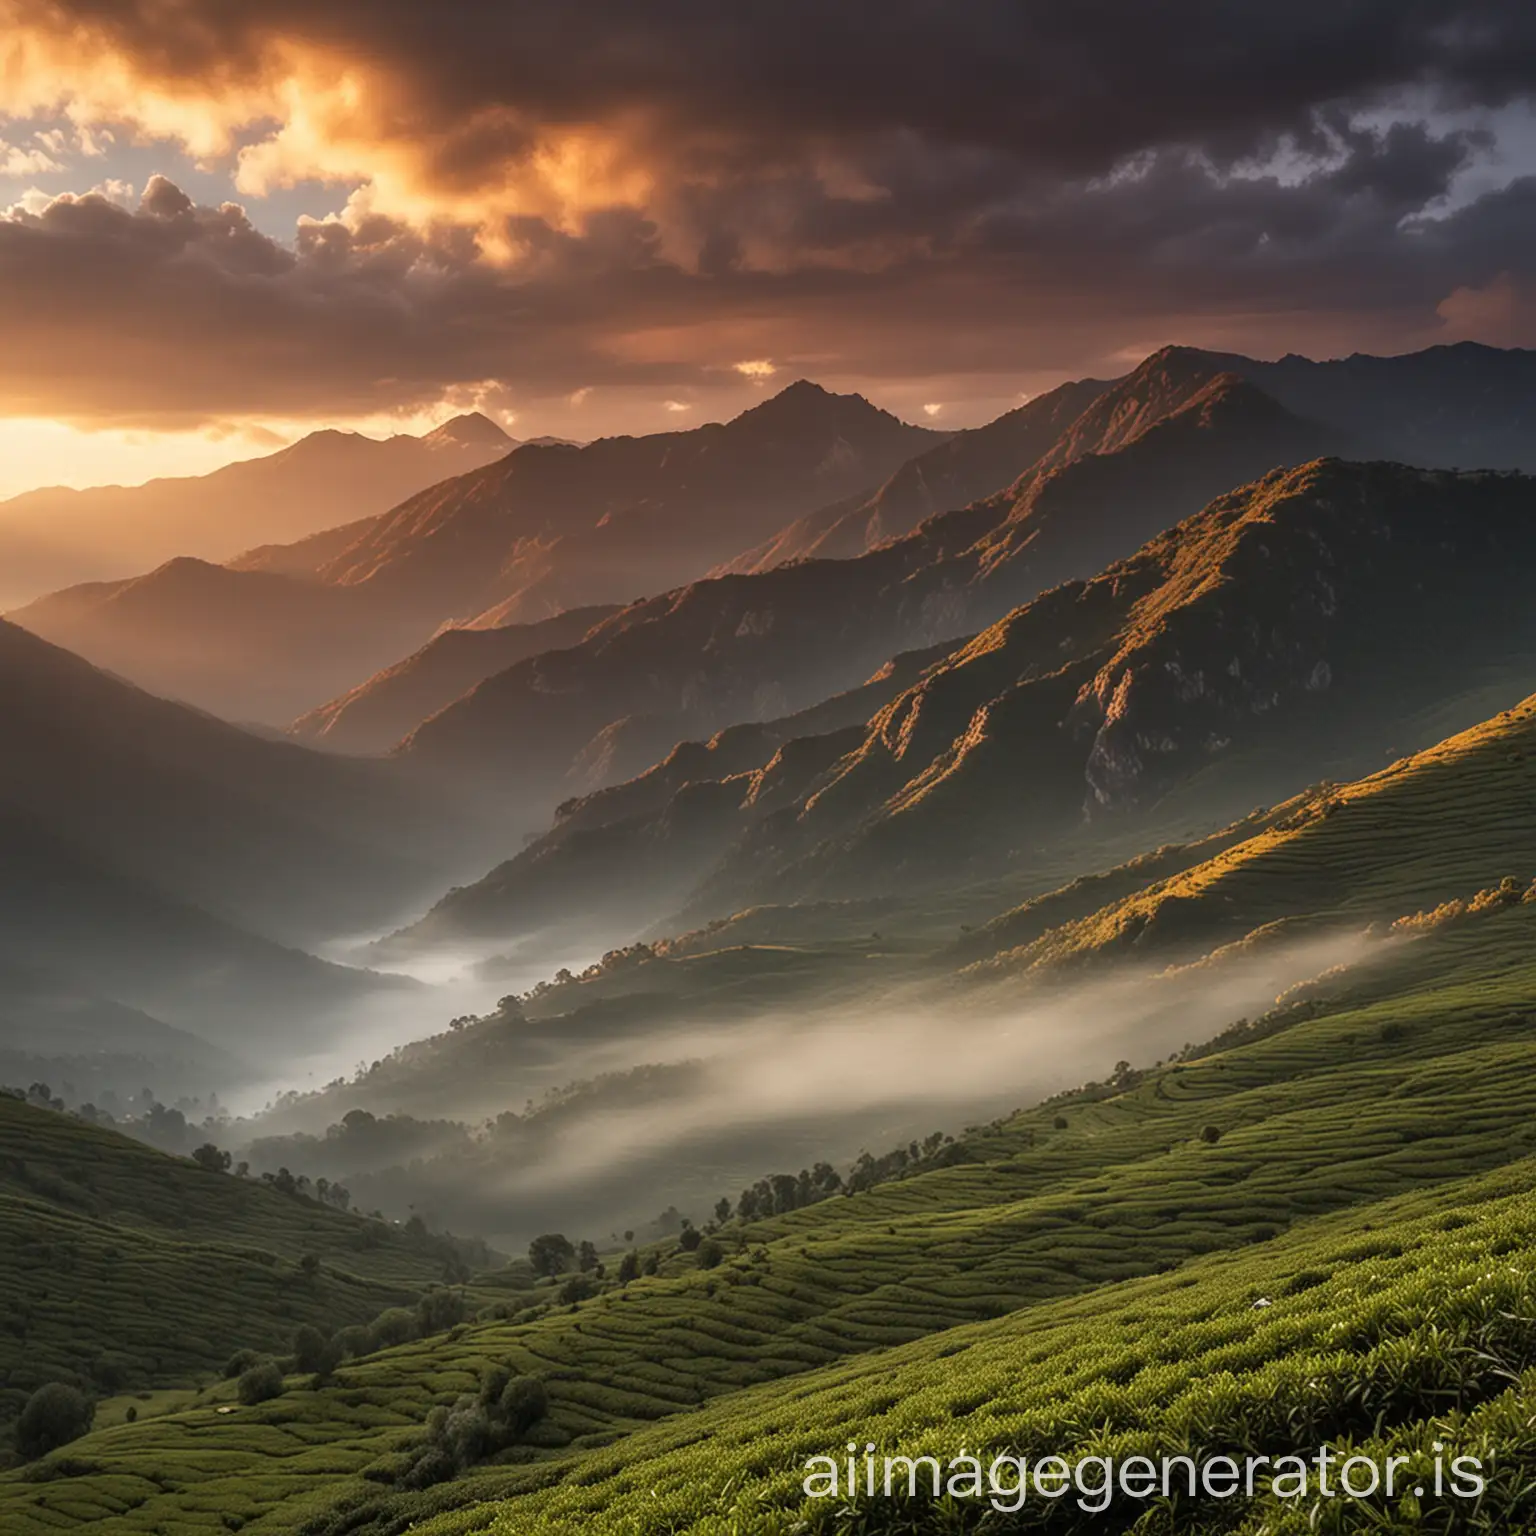 Mountain-Tea-Plantation-at-Sunrise-with-Dramatic-Clouds